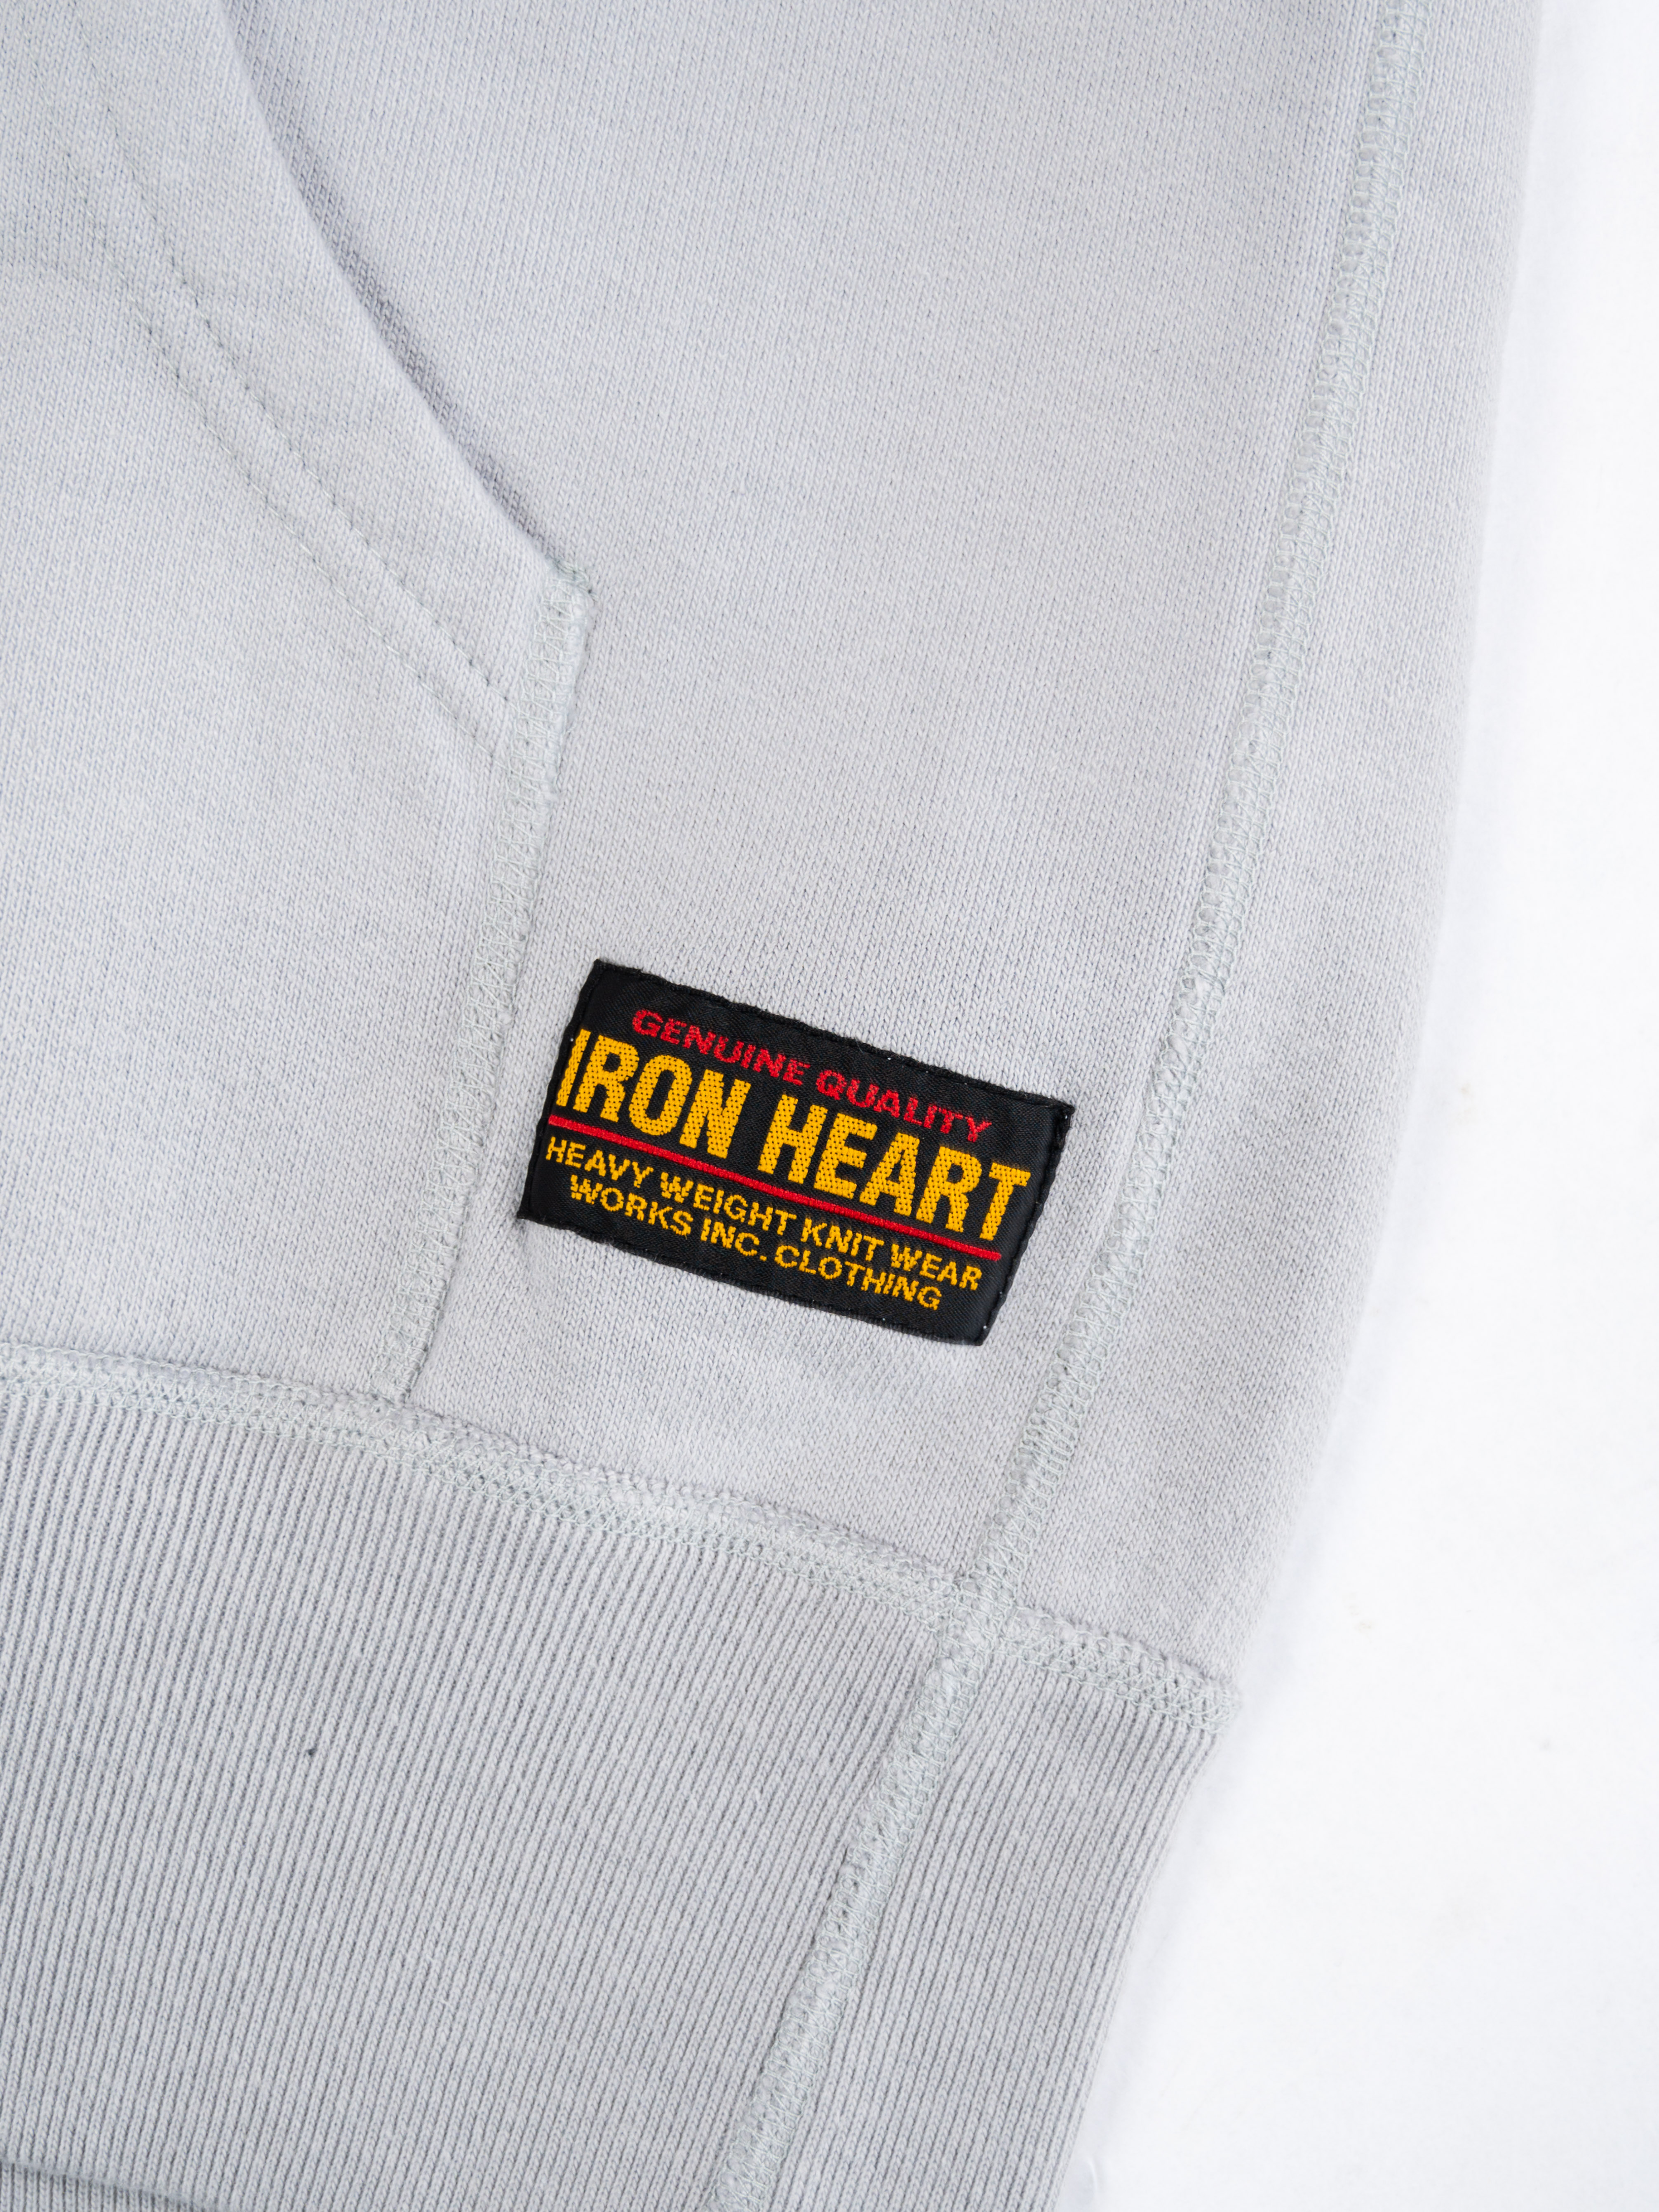 Iron Heart Ultra-Heavy Loopwheeled Hoodie - Zip-Up Gray - Image 8